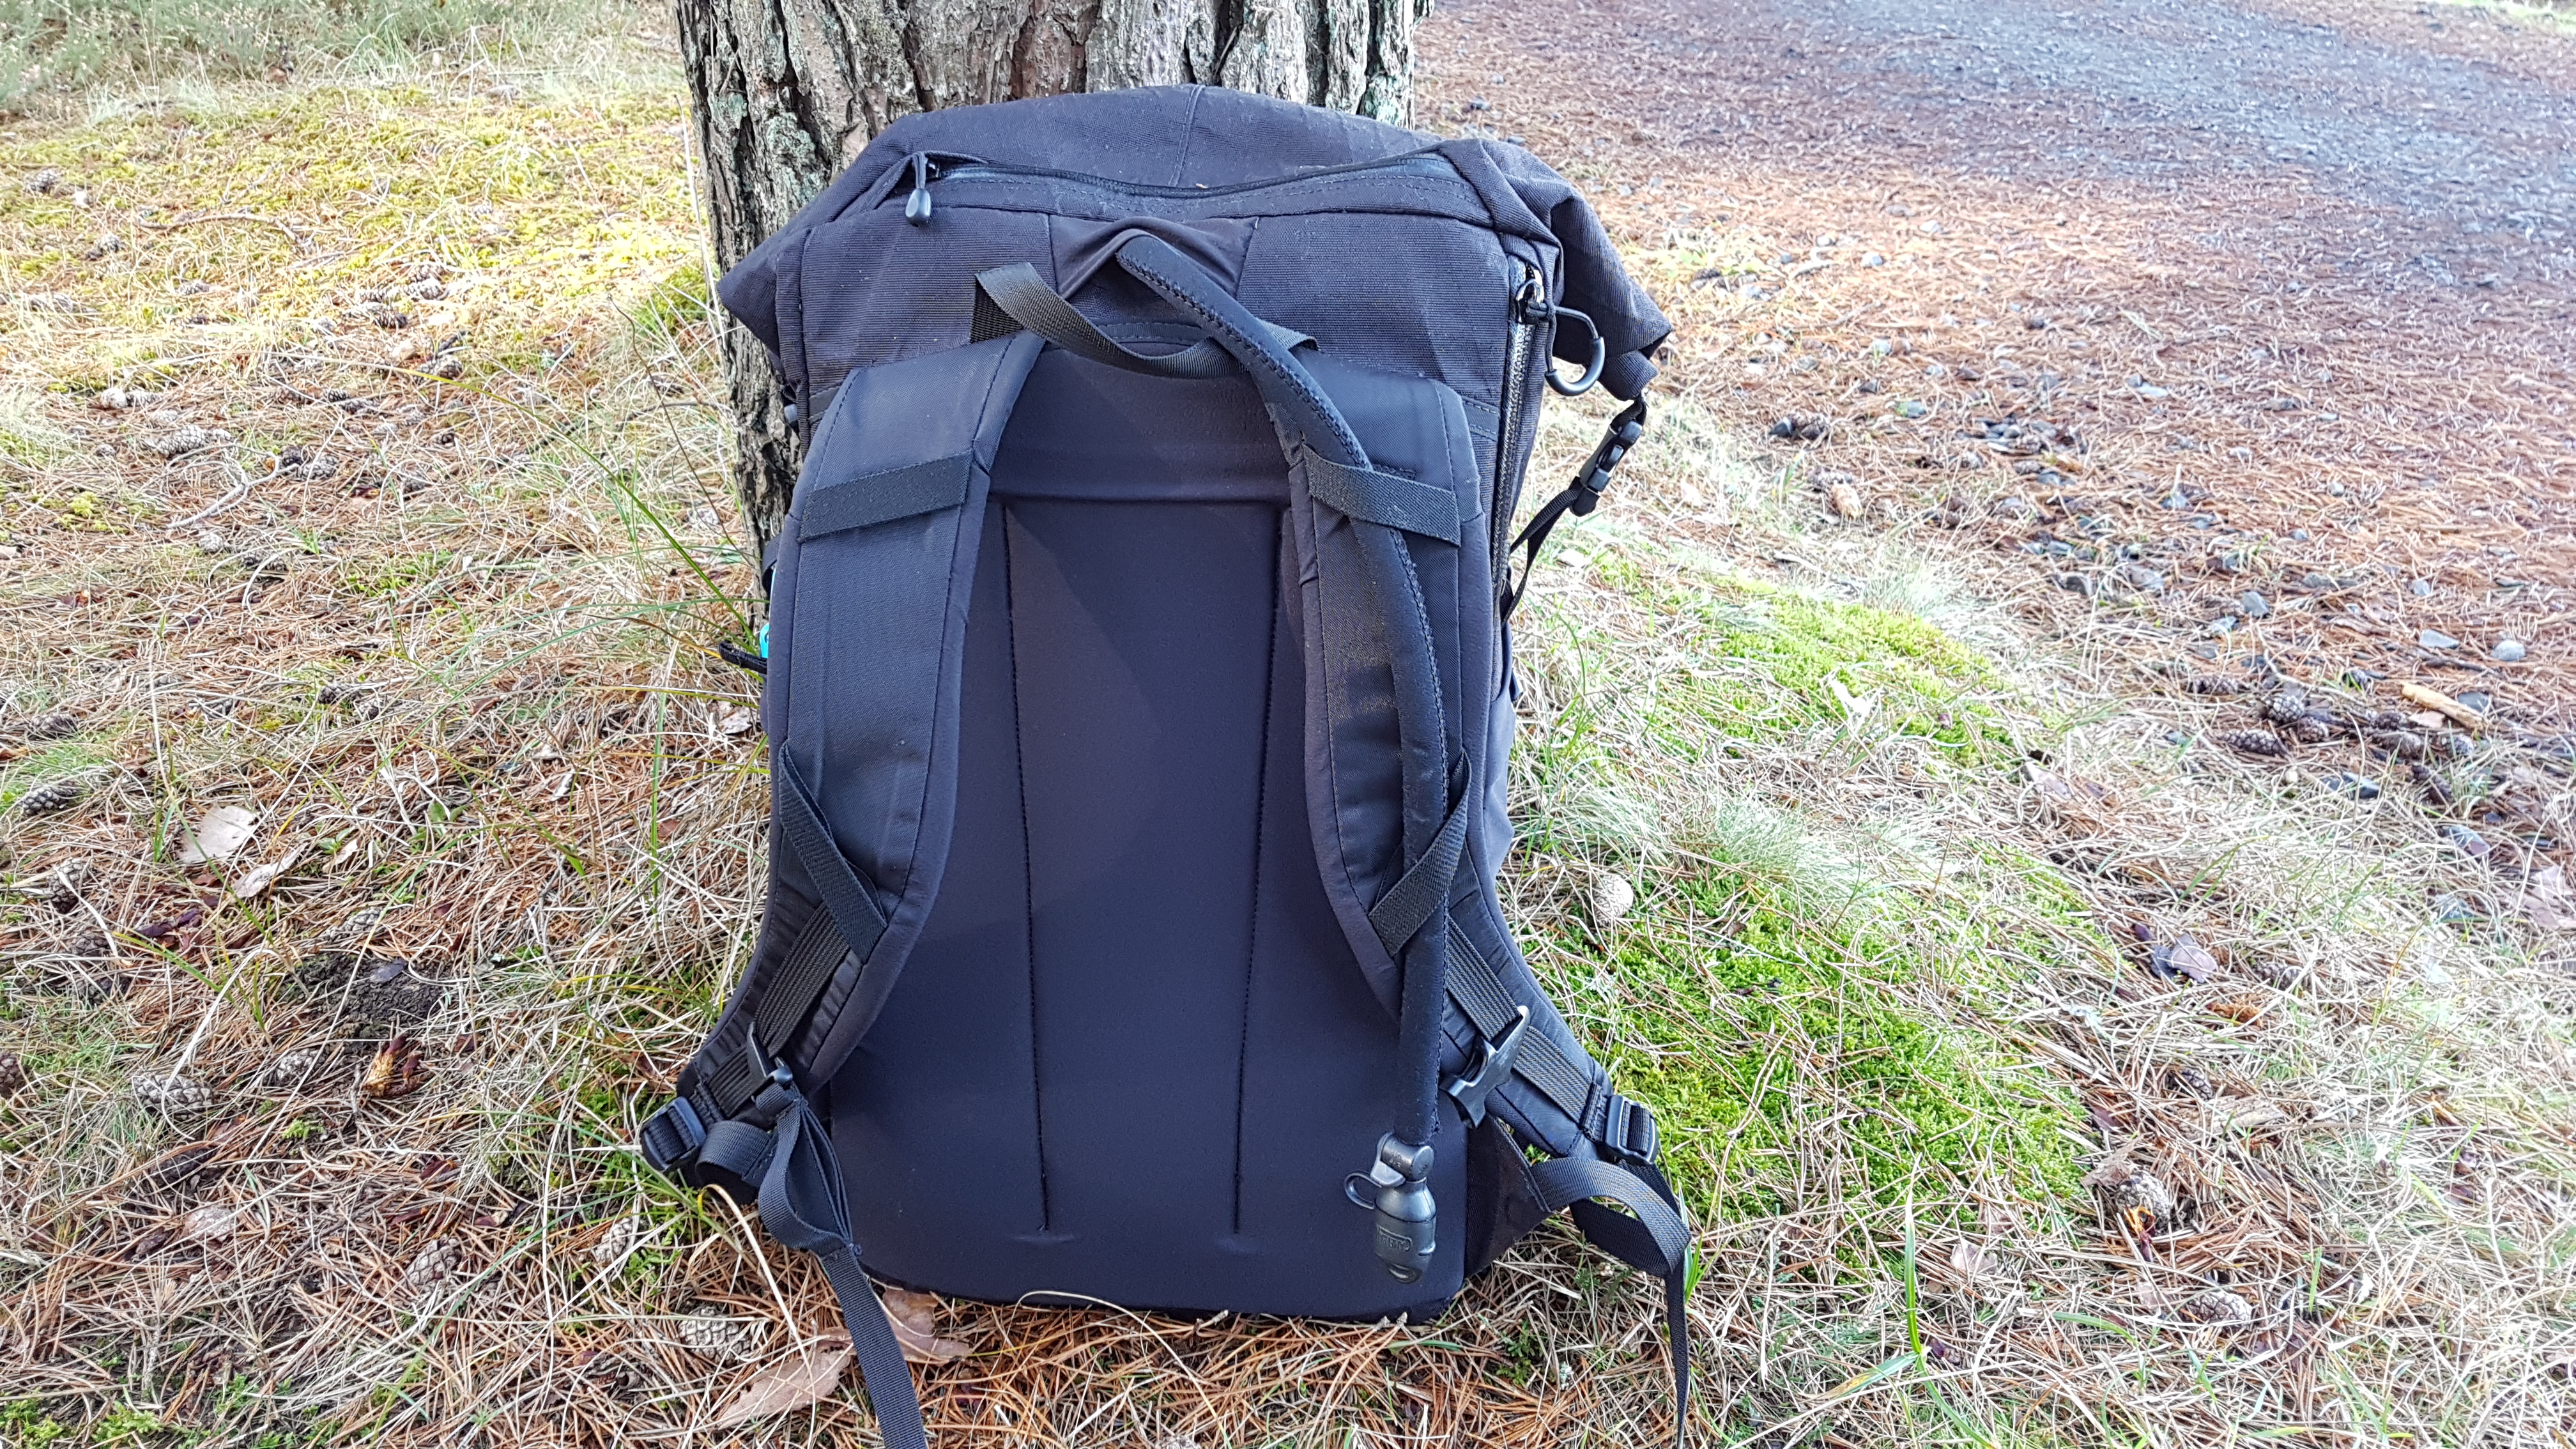 Remote Equipment Alpha 31 Backpack back panel harness